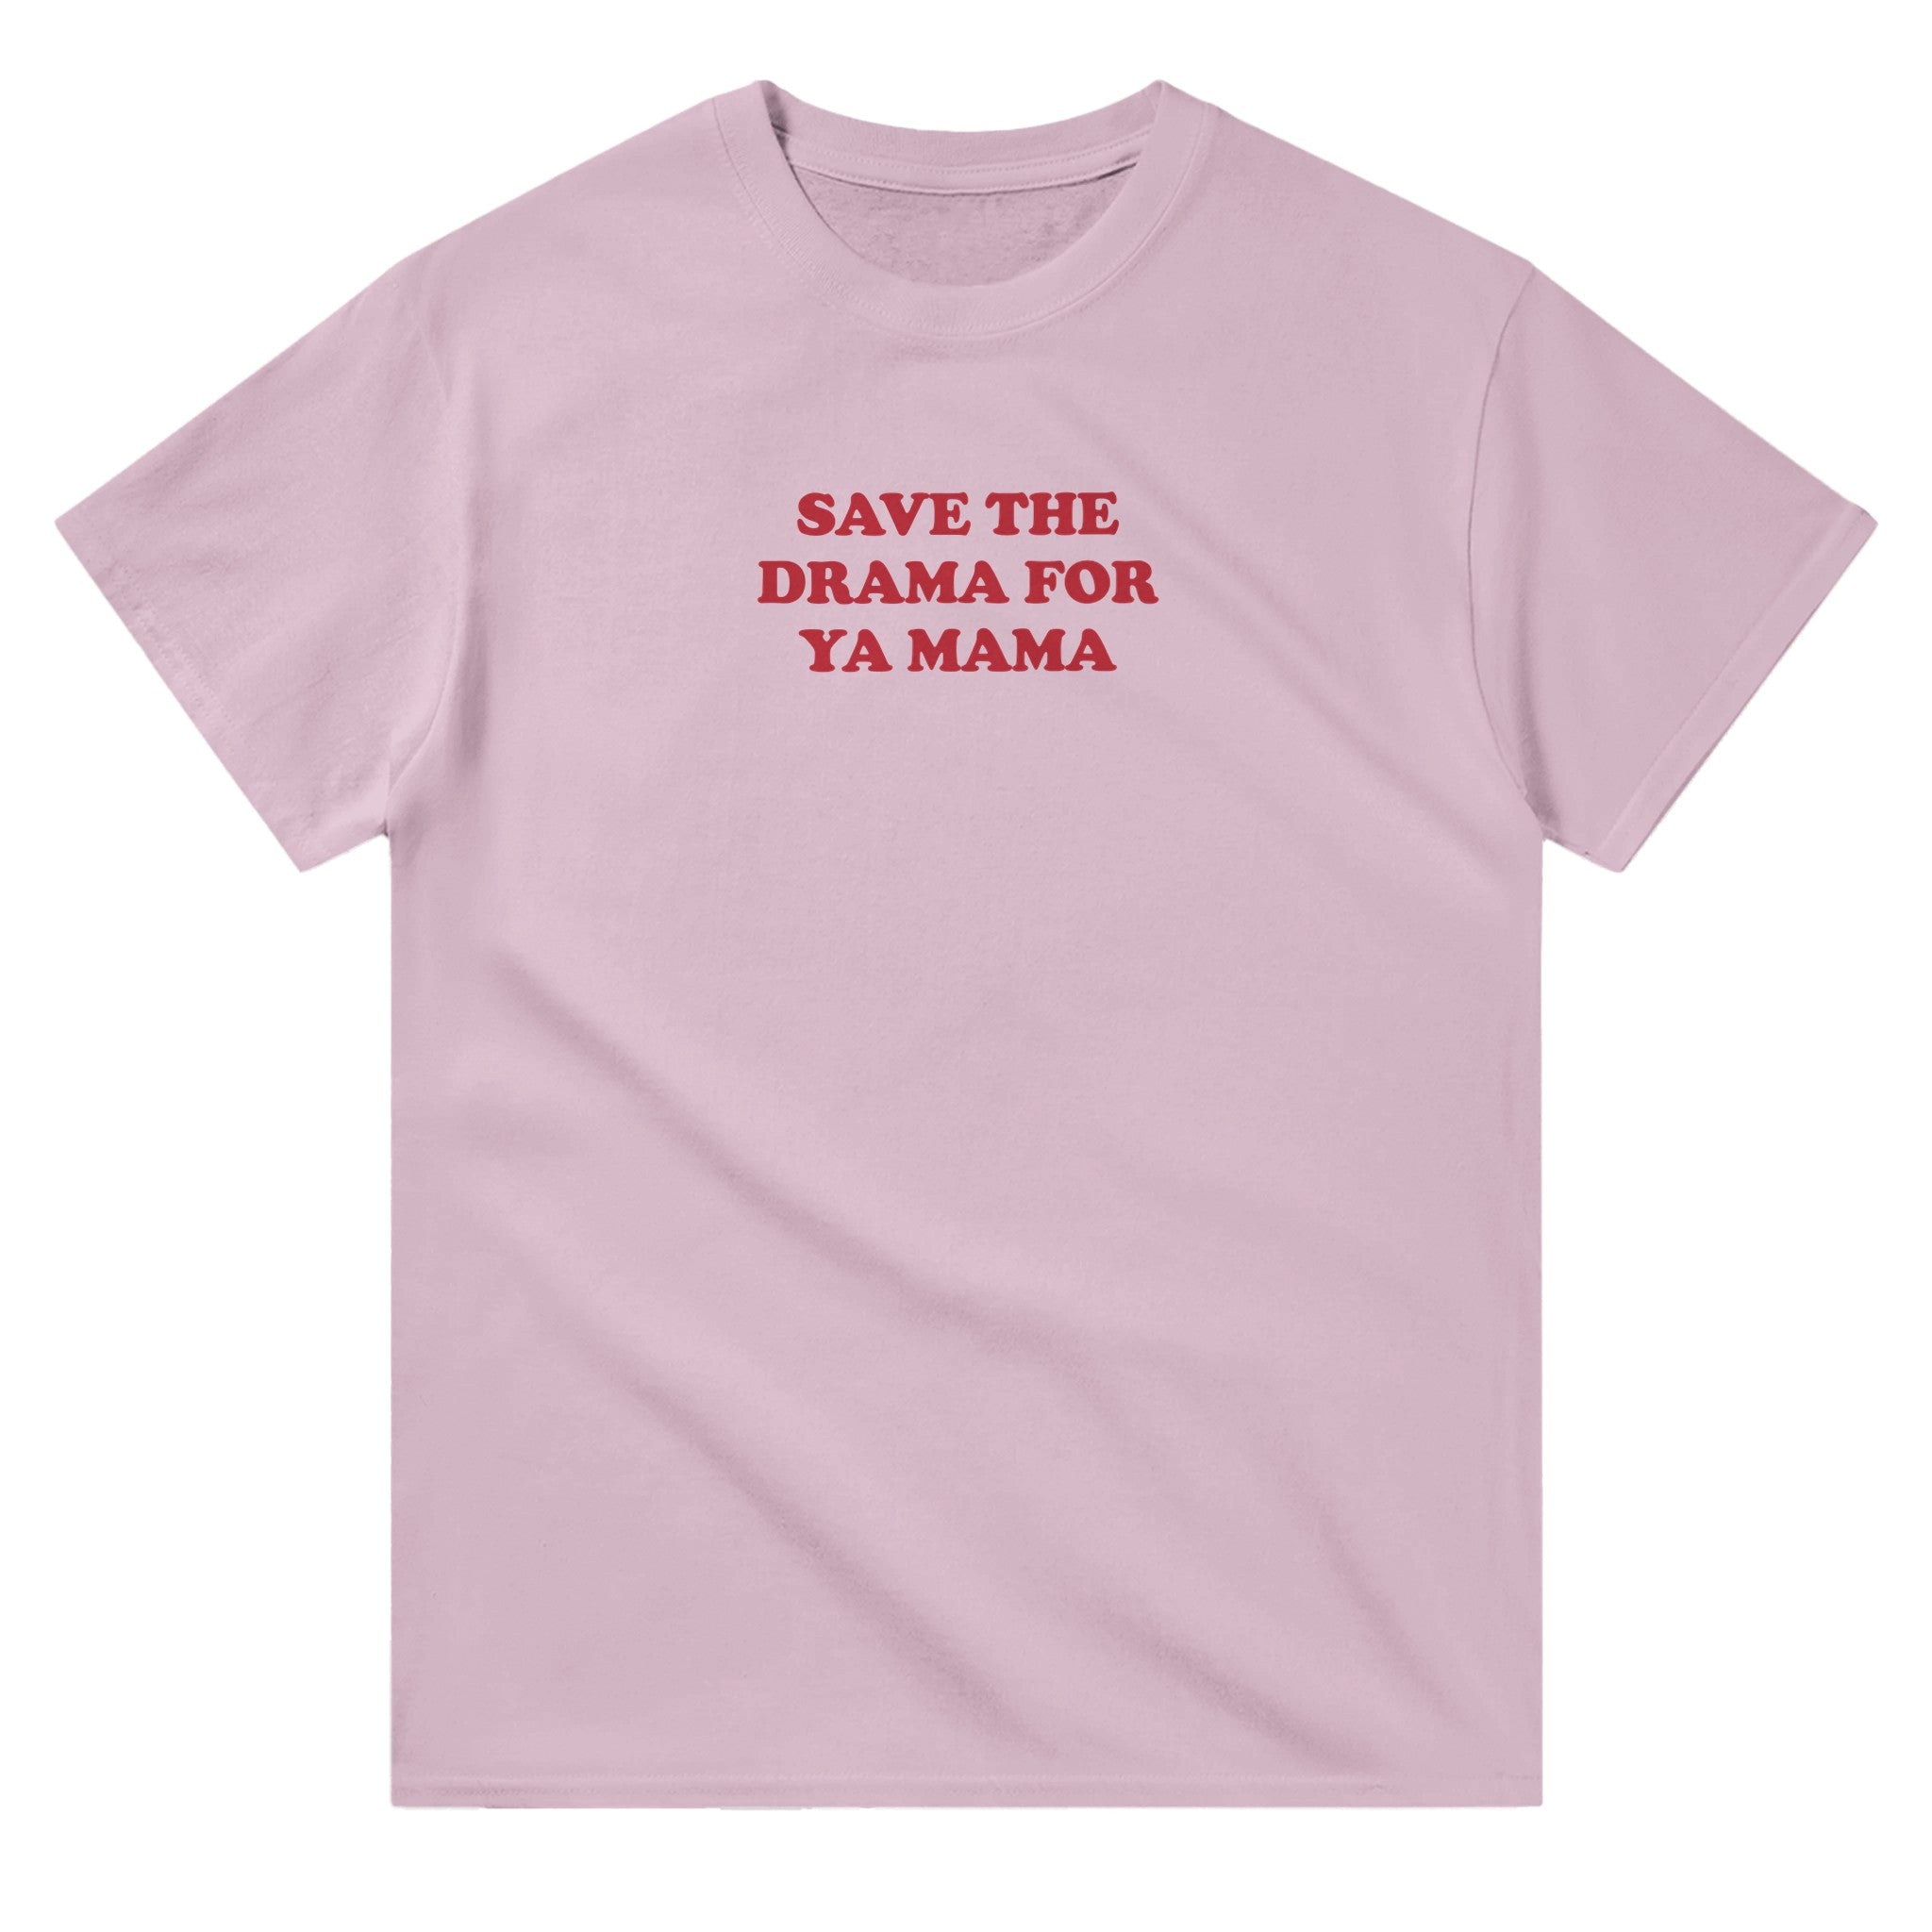 'Save the Drama for ya Mama' classic tee - In Print We Trust